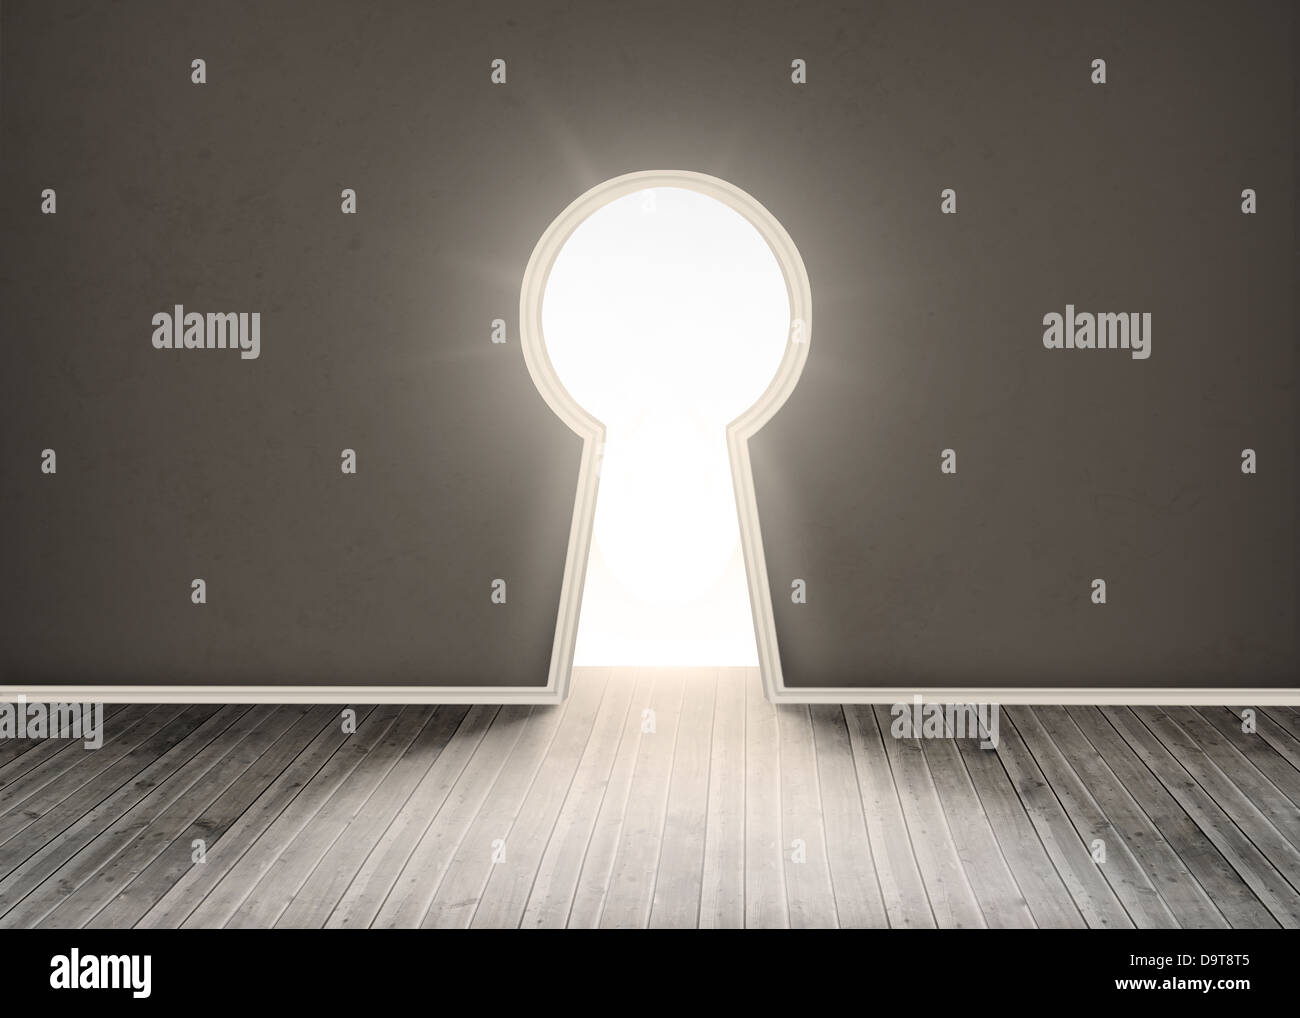 Door shaped keyhole showing bright light Stock Photo